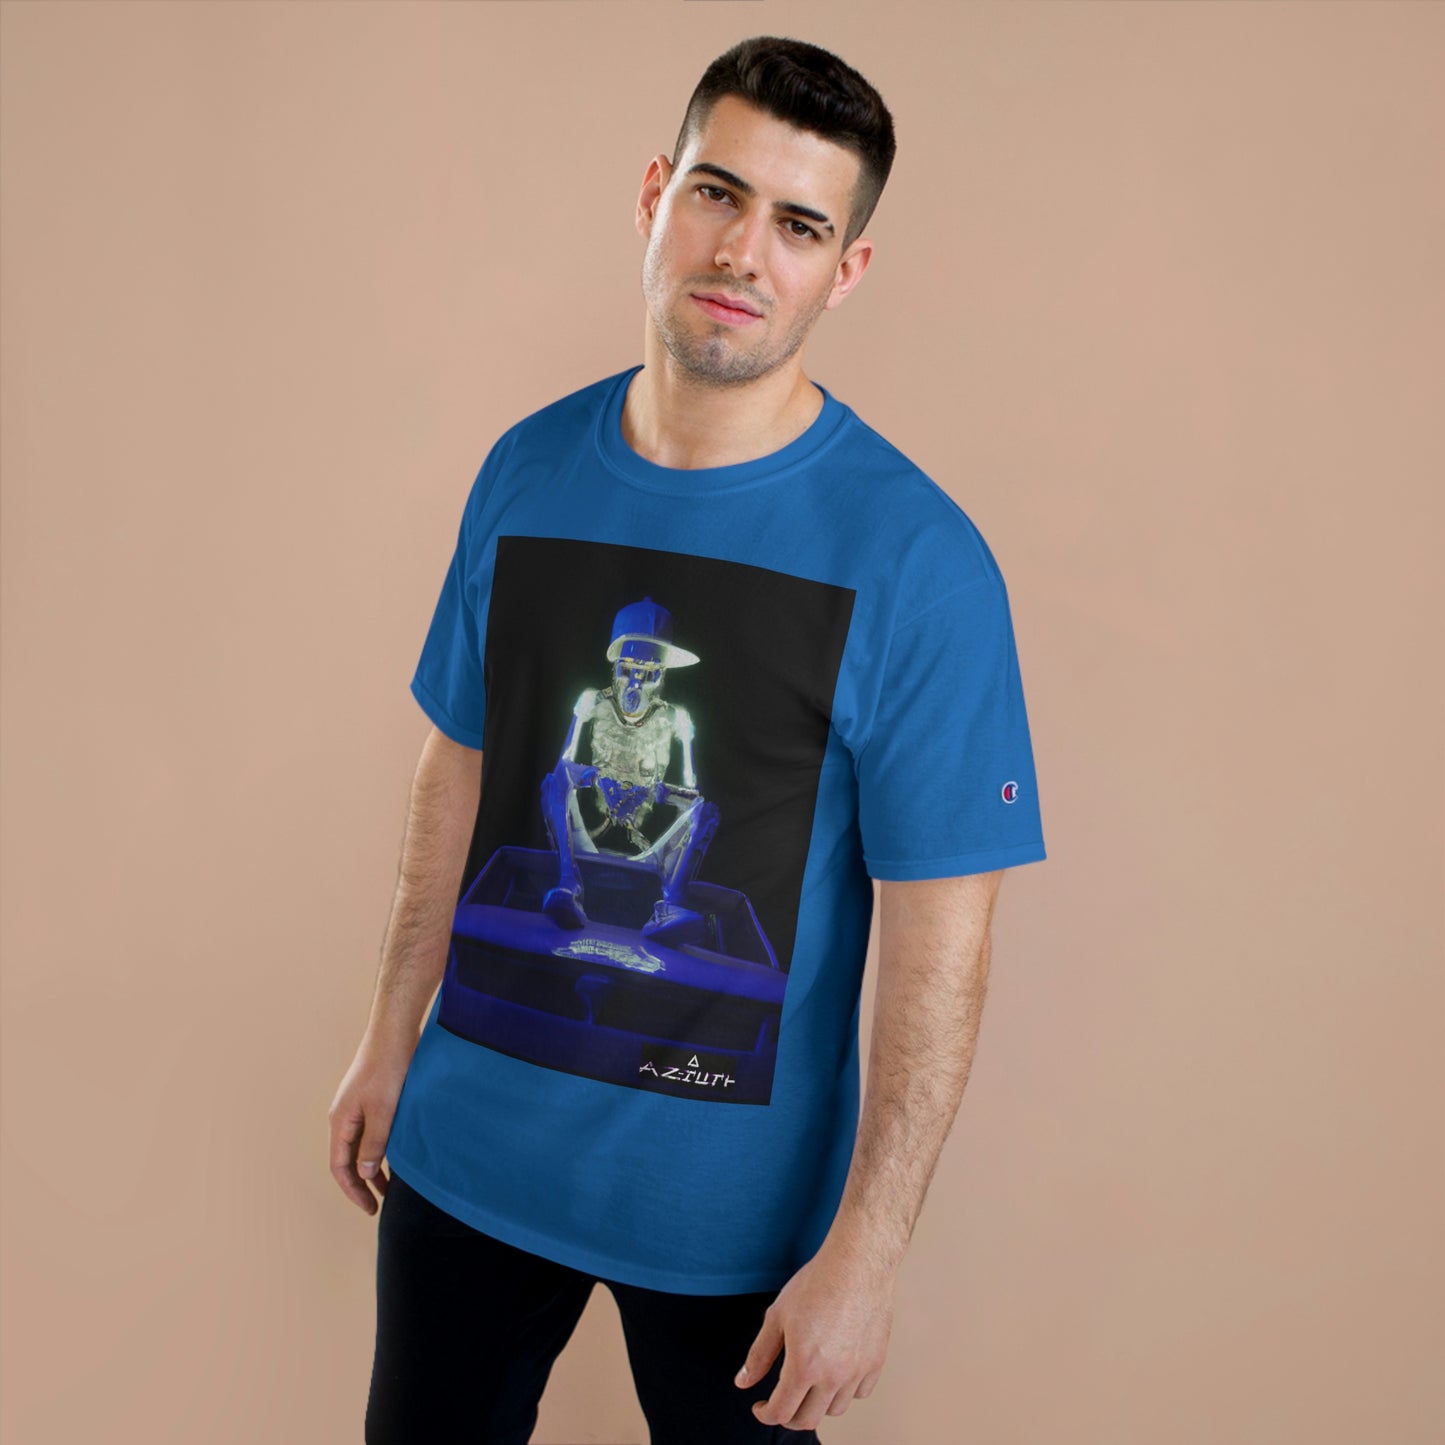 Atziluth Gallery x Champion "Dark Mode On" T-shirt